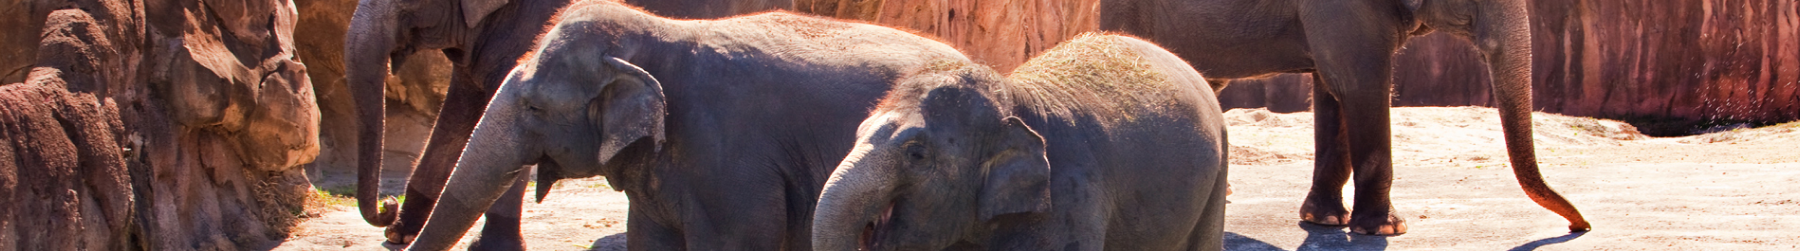 Elephant Insider Tour at Busch Gardens